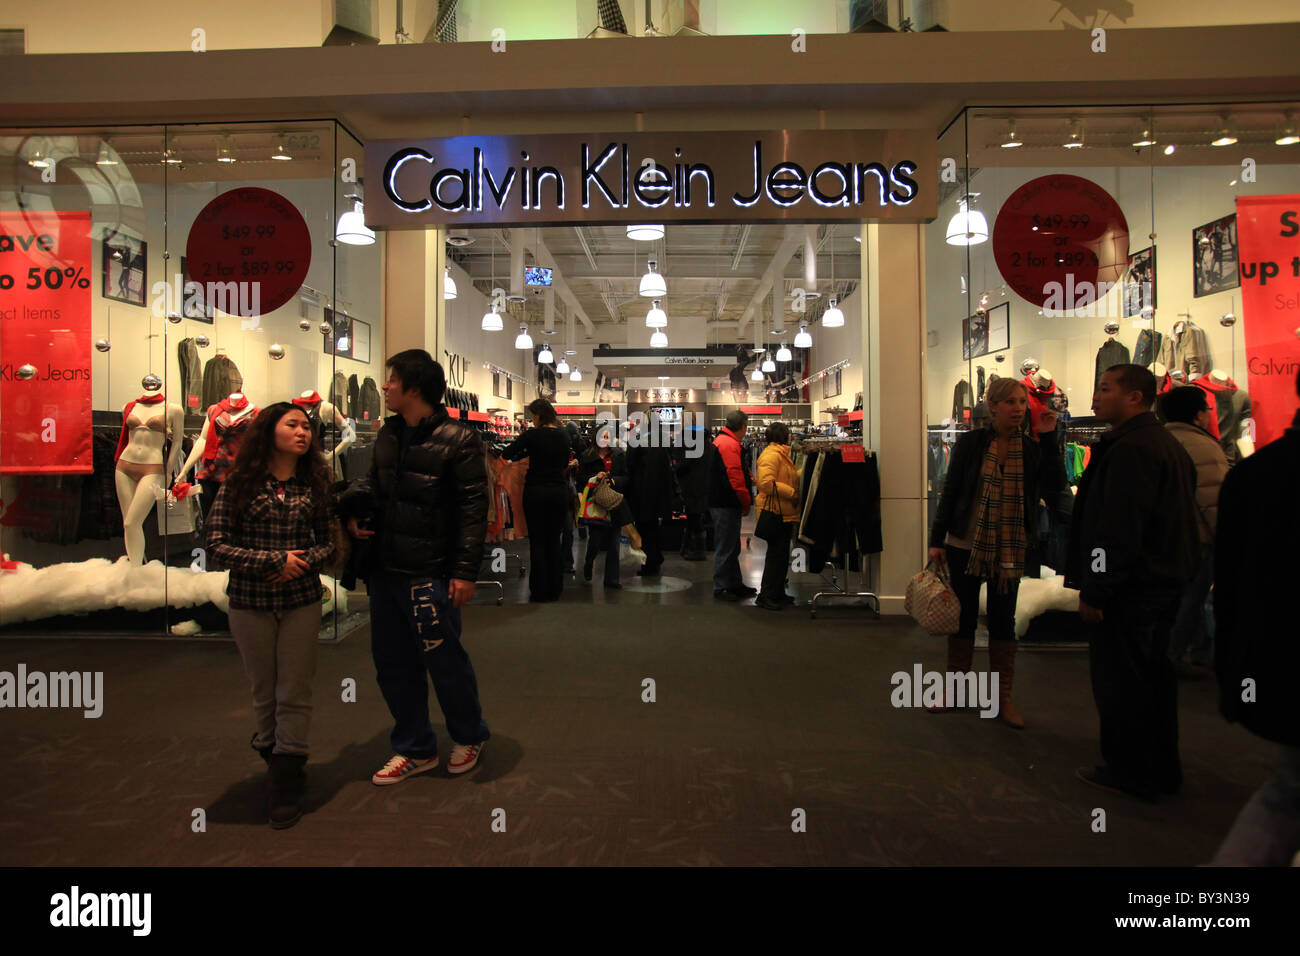 Calvin Klein Jeans Canada Factory Sale, 59% OFF | blountpartnership.com